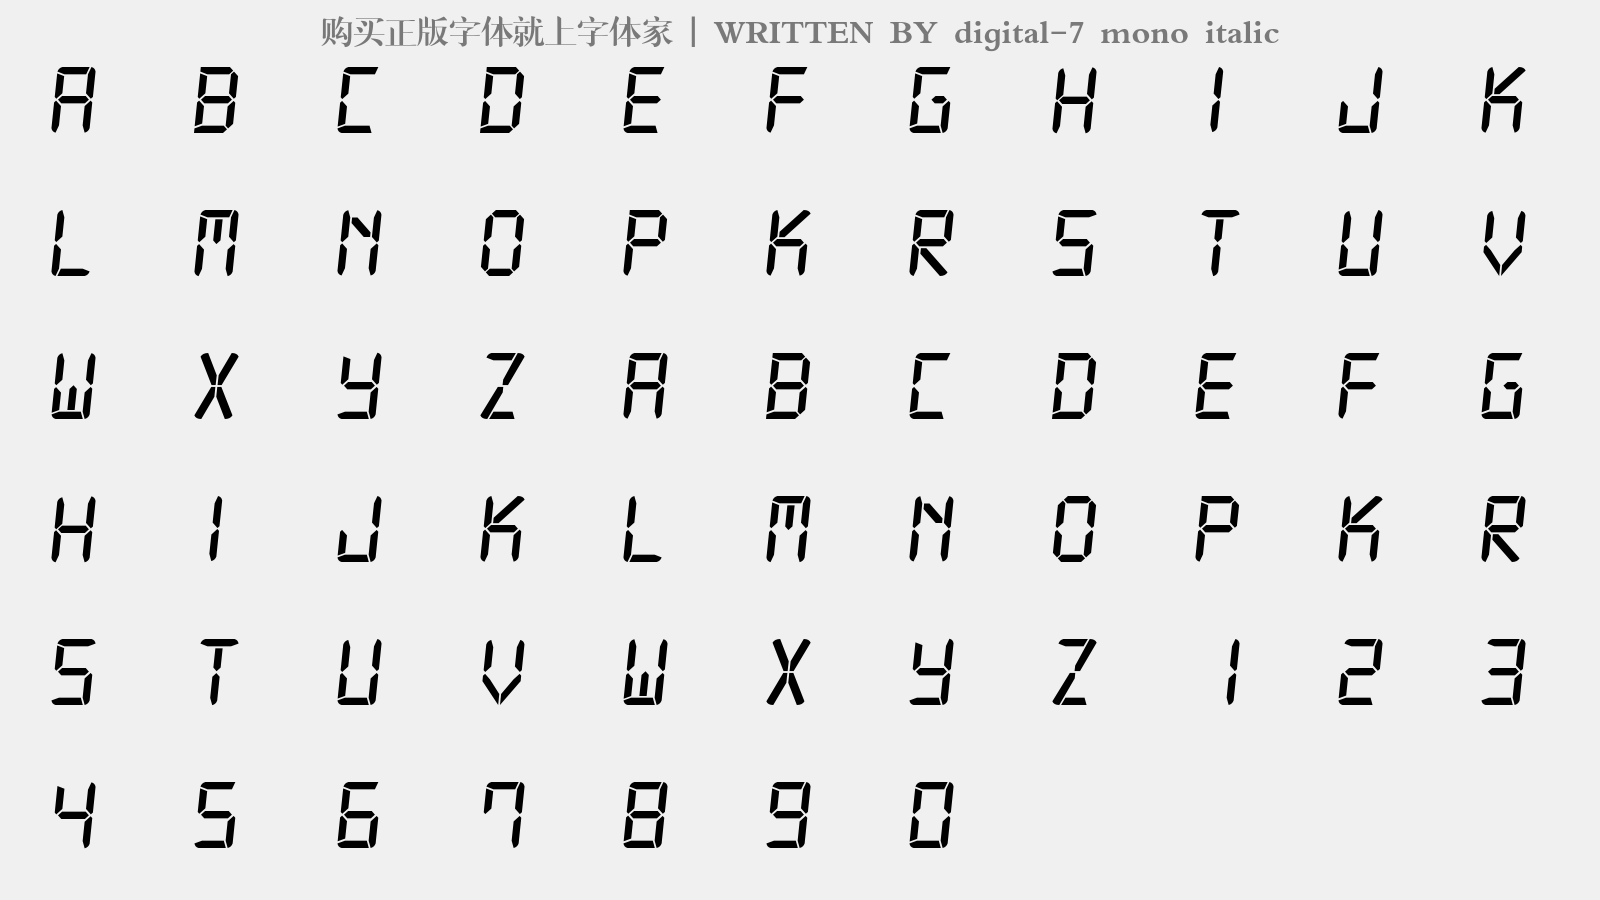 digital-7 mono italic - 大写字母/小写字母/数字